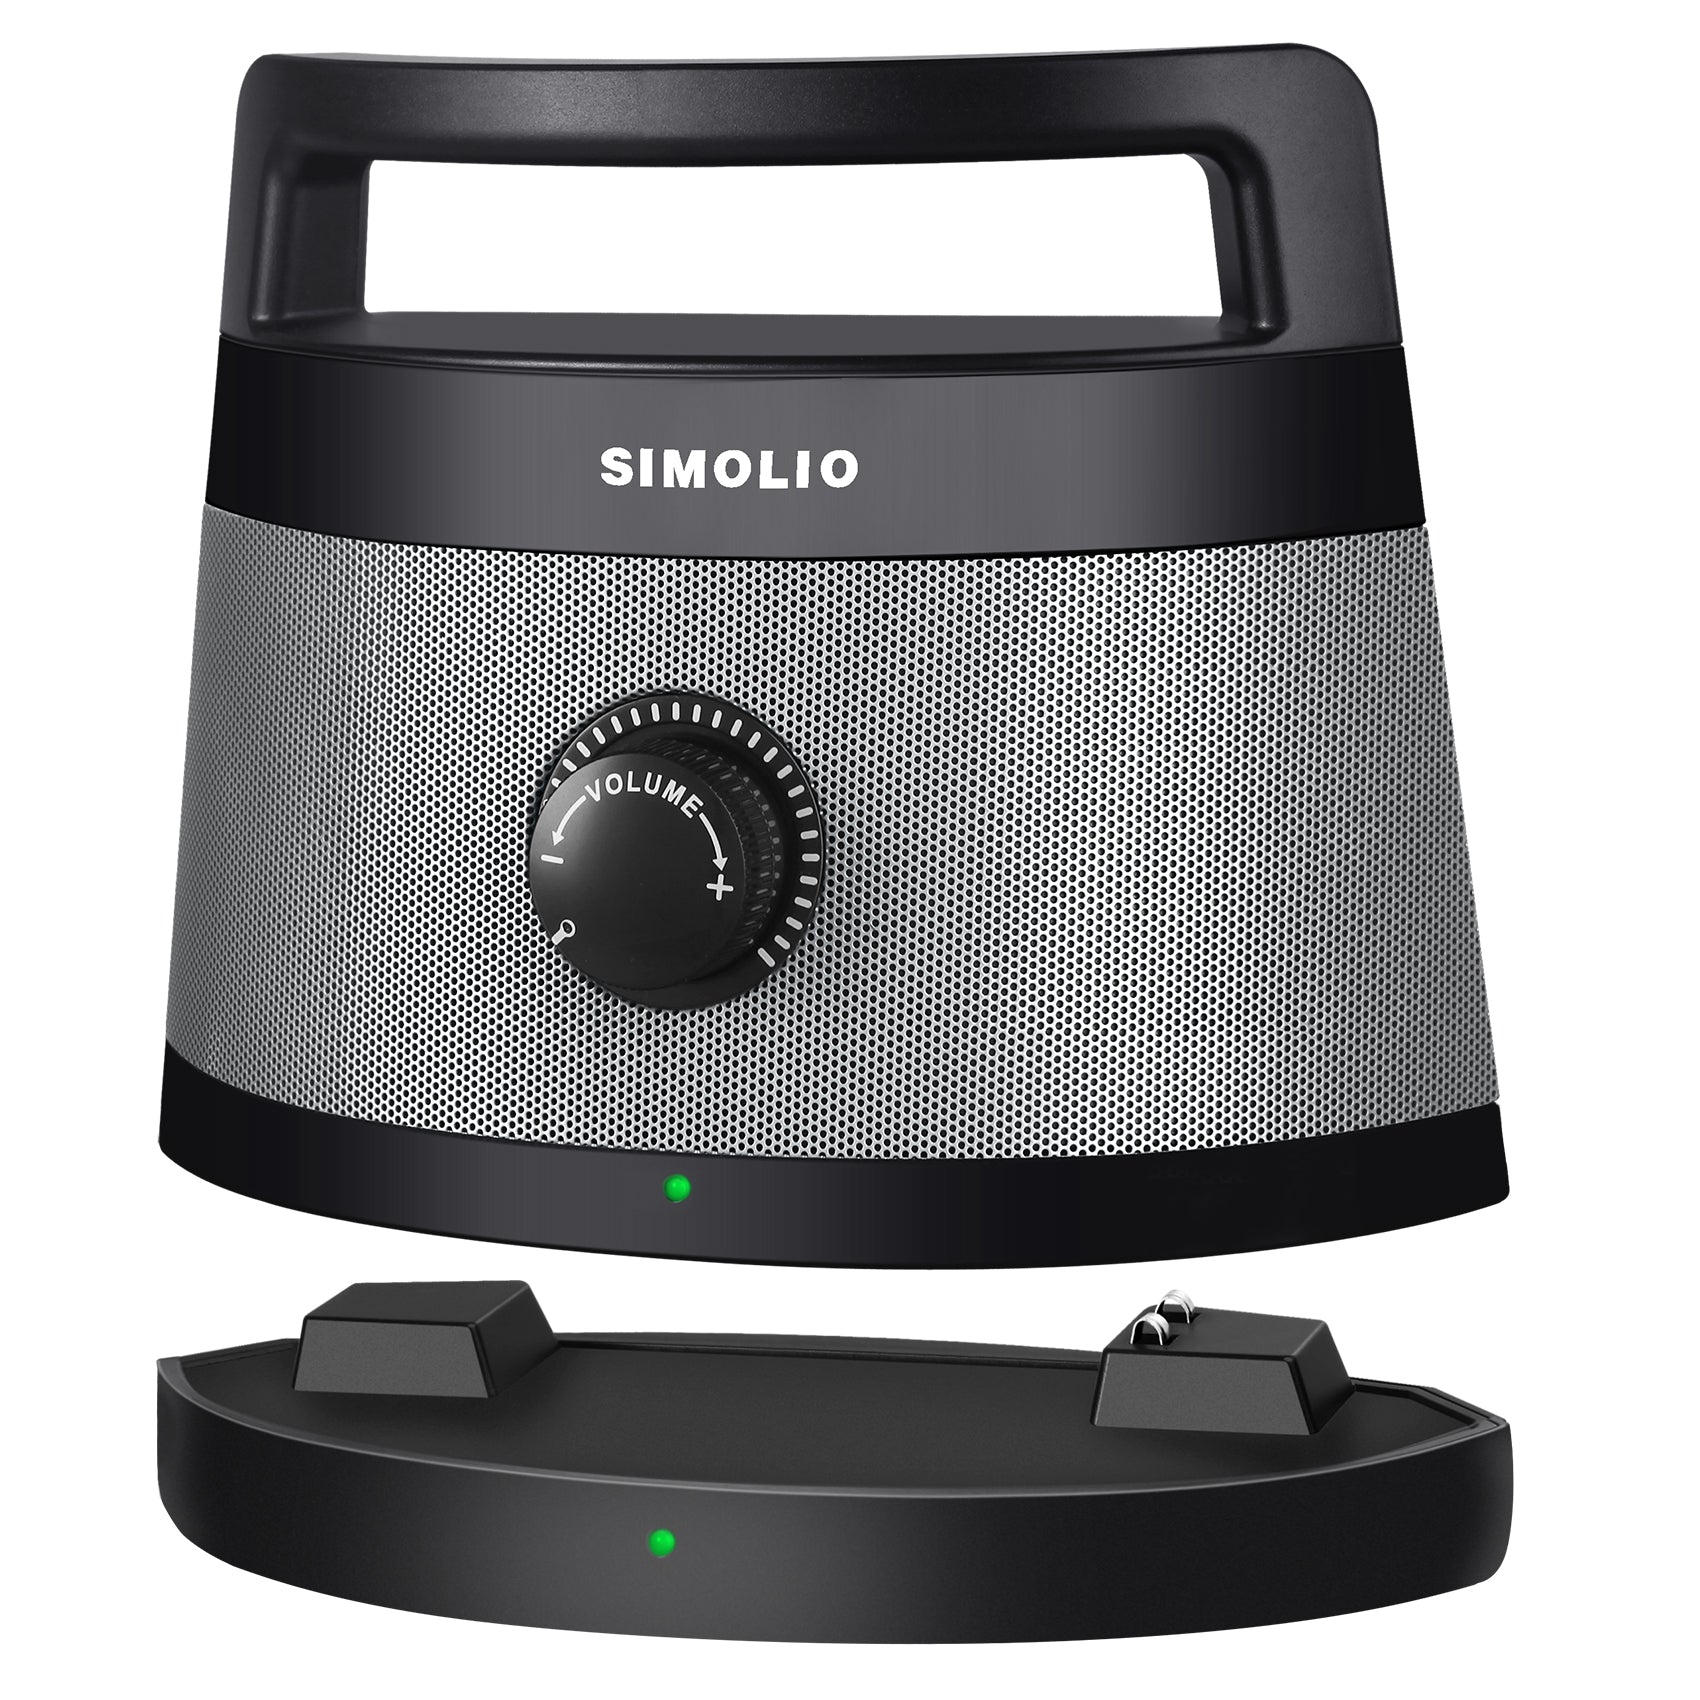 SIMOLIO portable wireless speakers for TV SM-621D